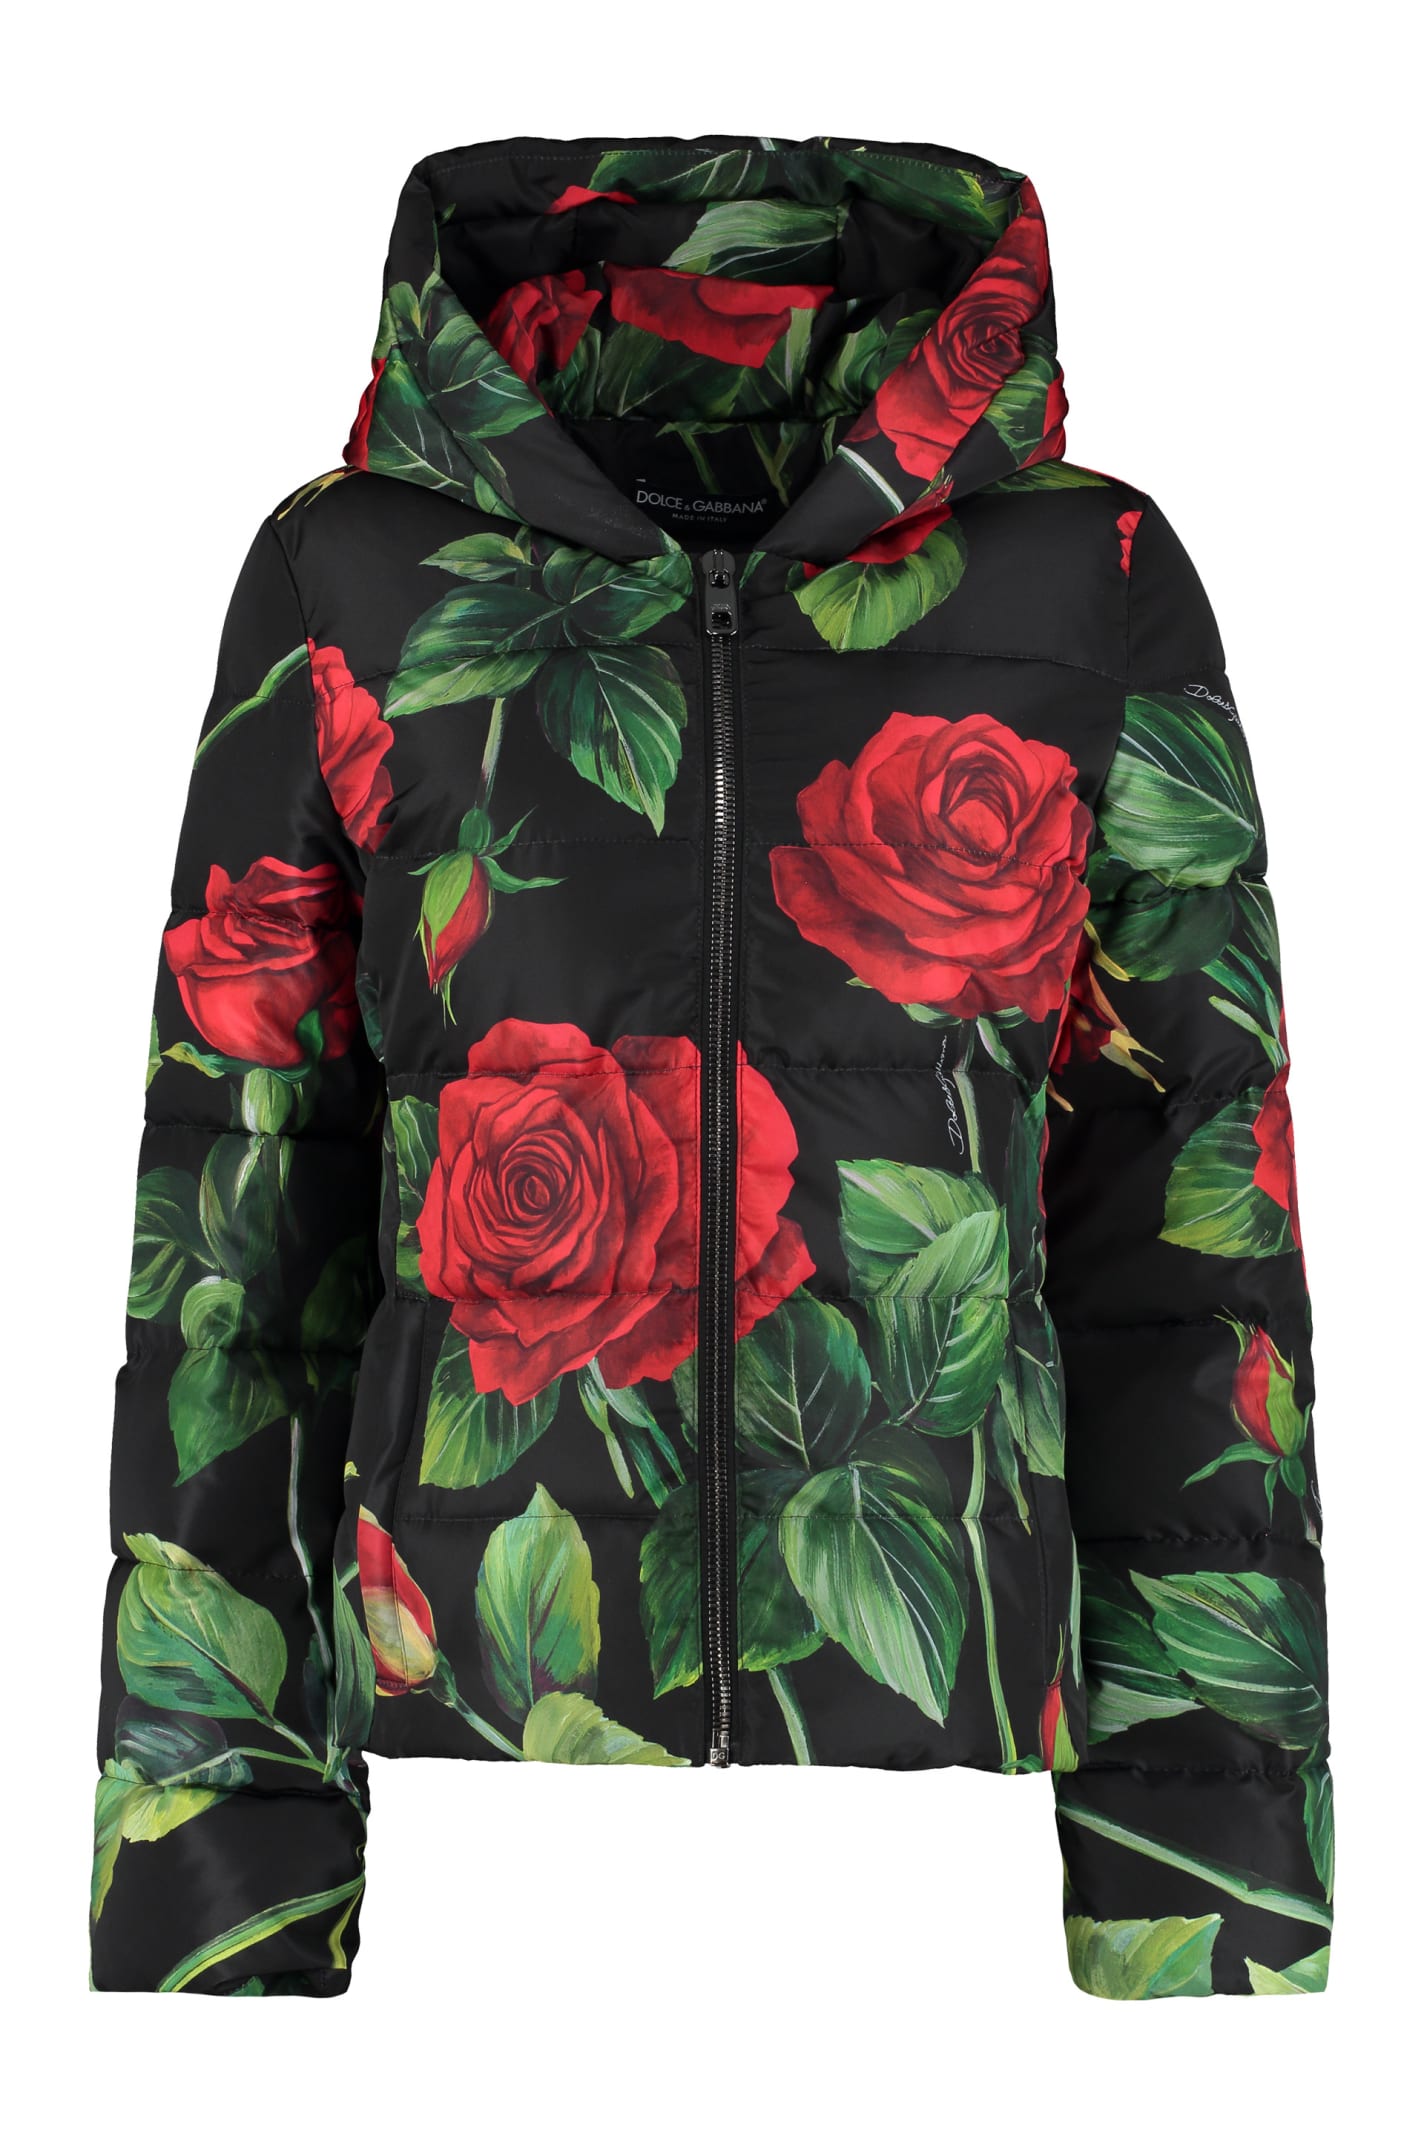 Dolce & Gabbana Floral Print Down Jacket